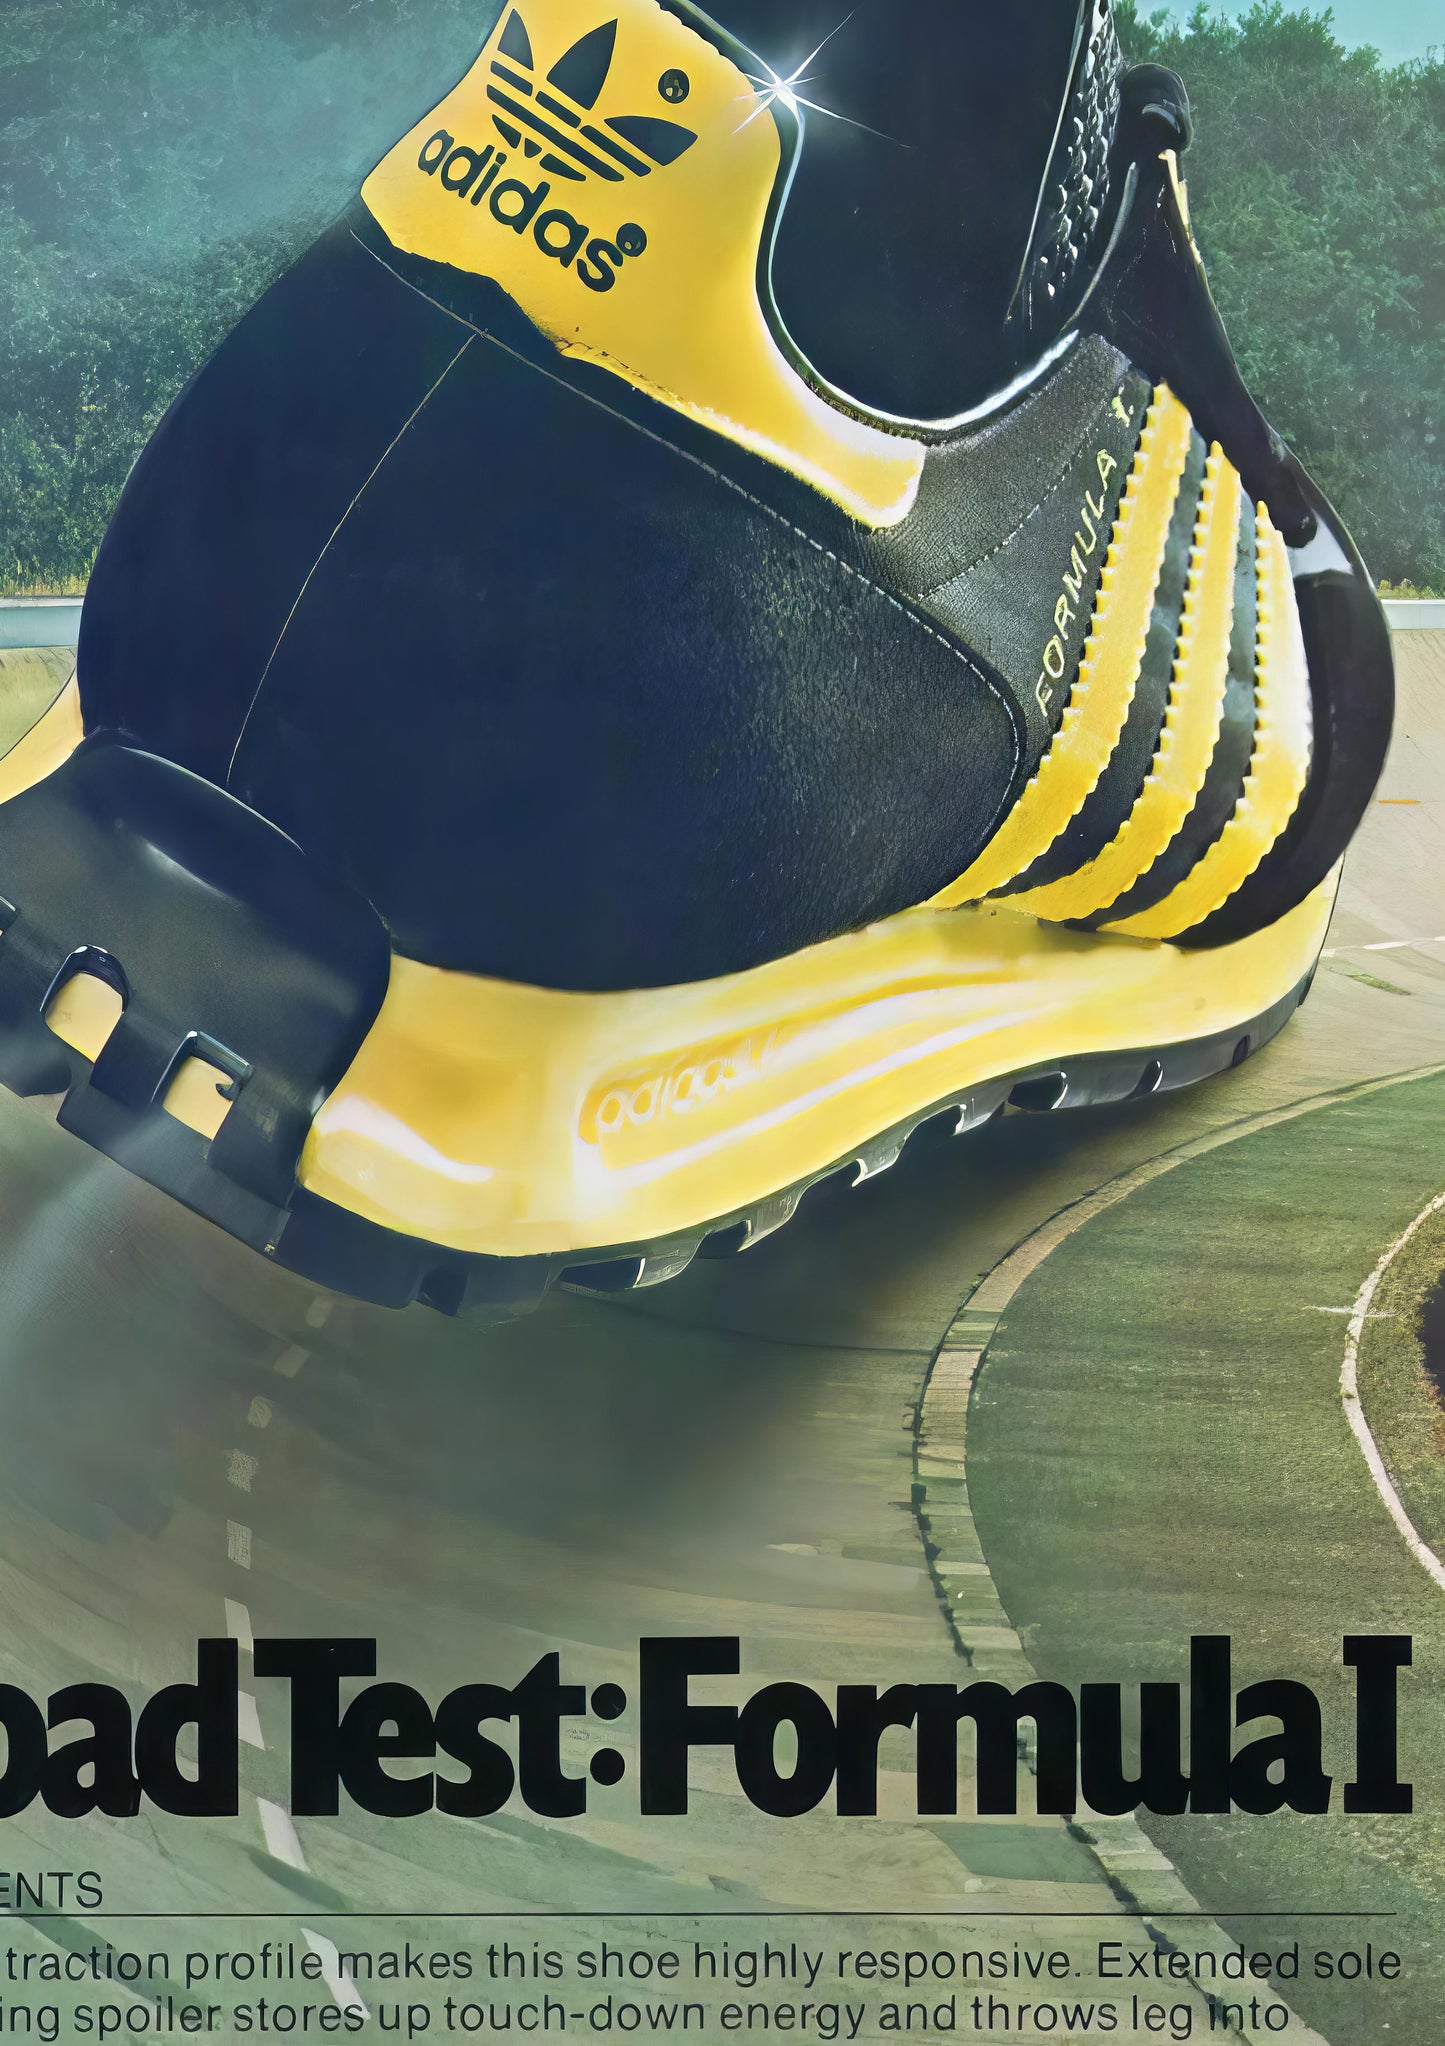 Adidas Formula 1 Poster